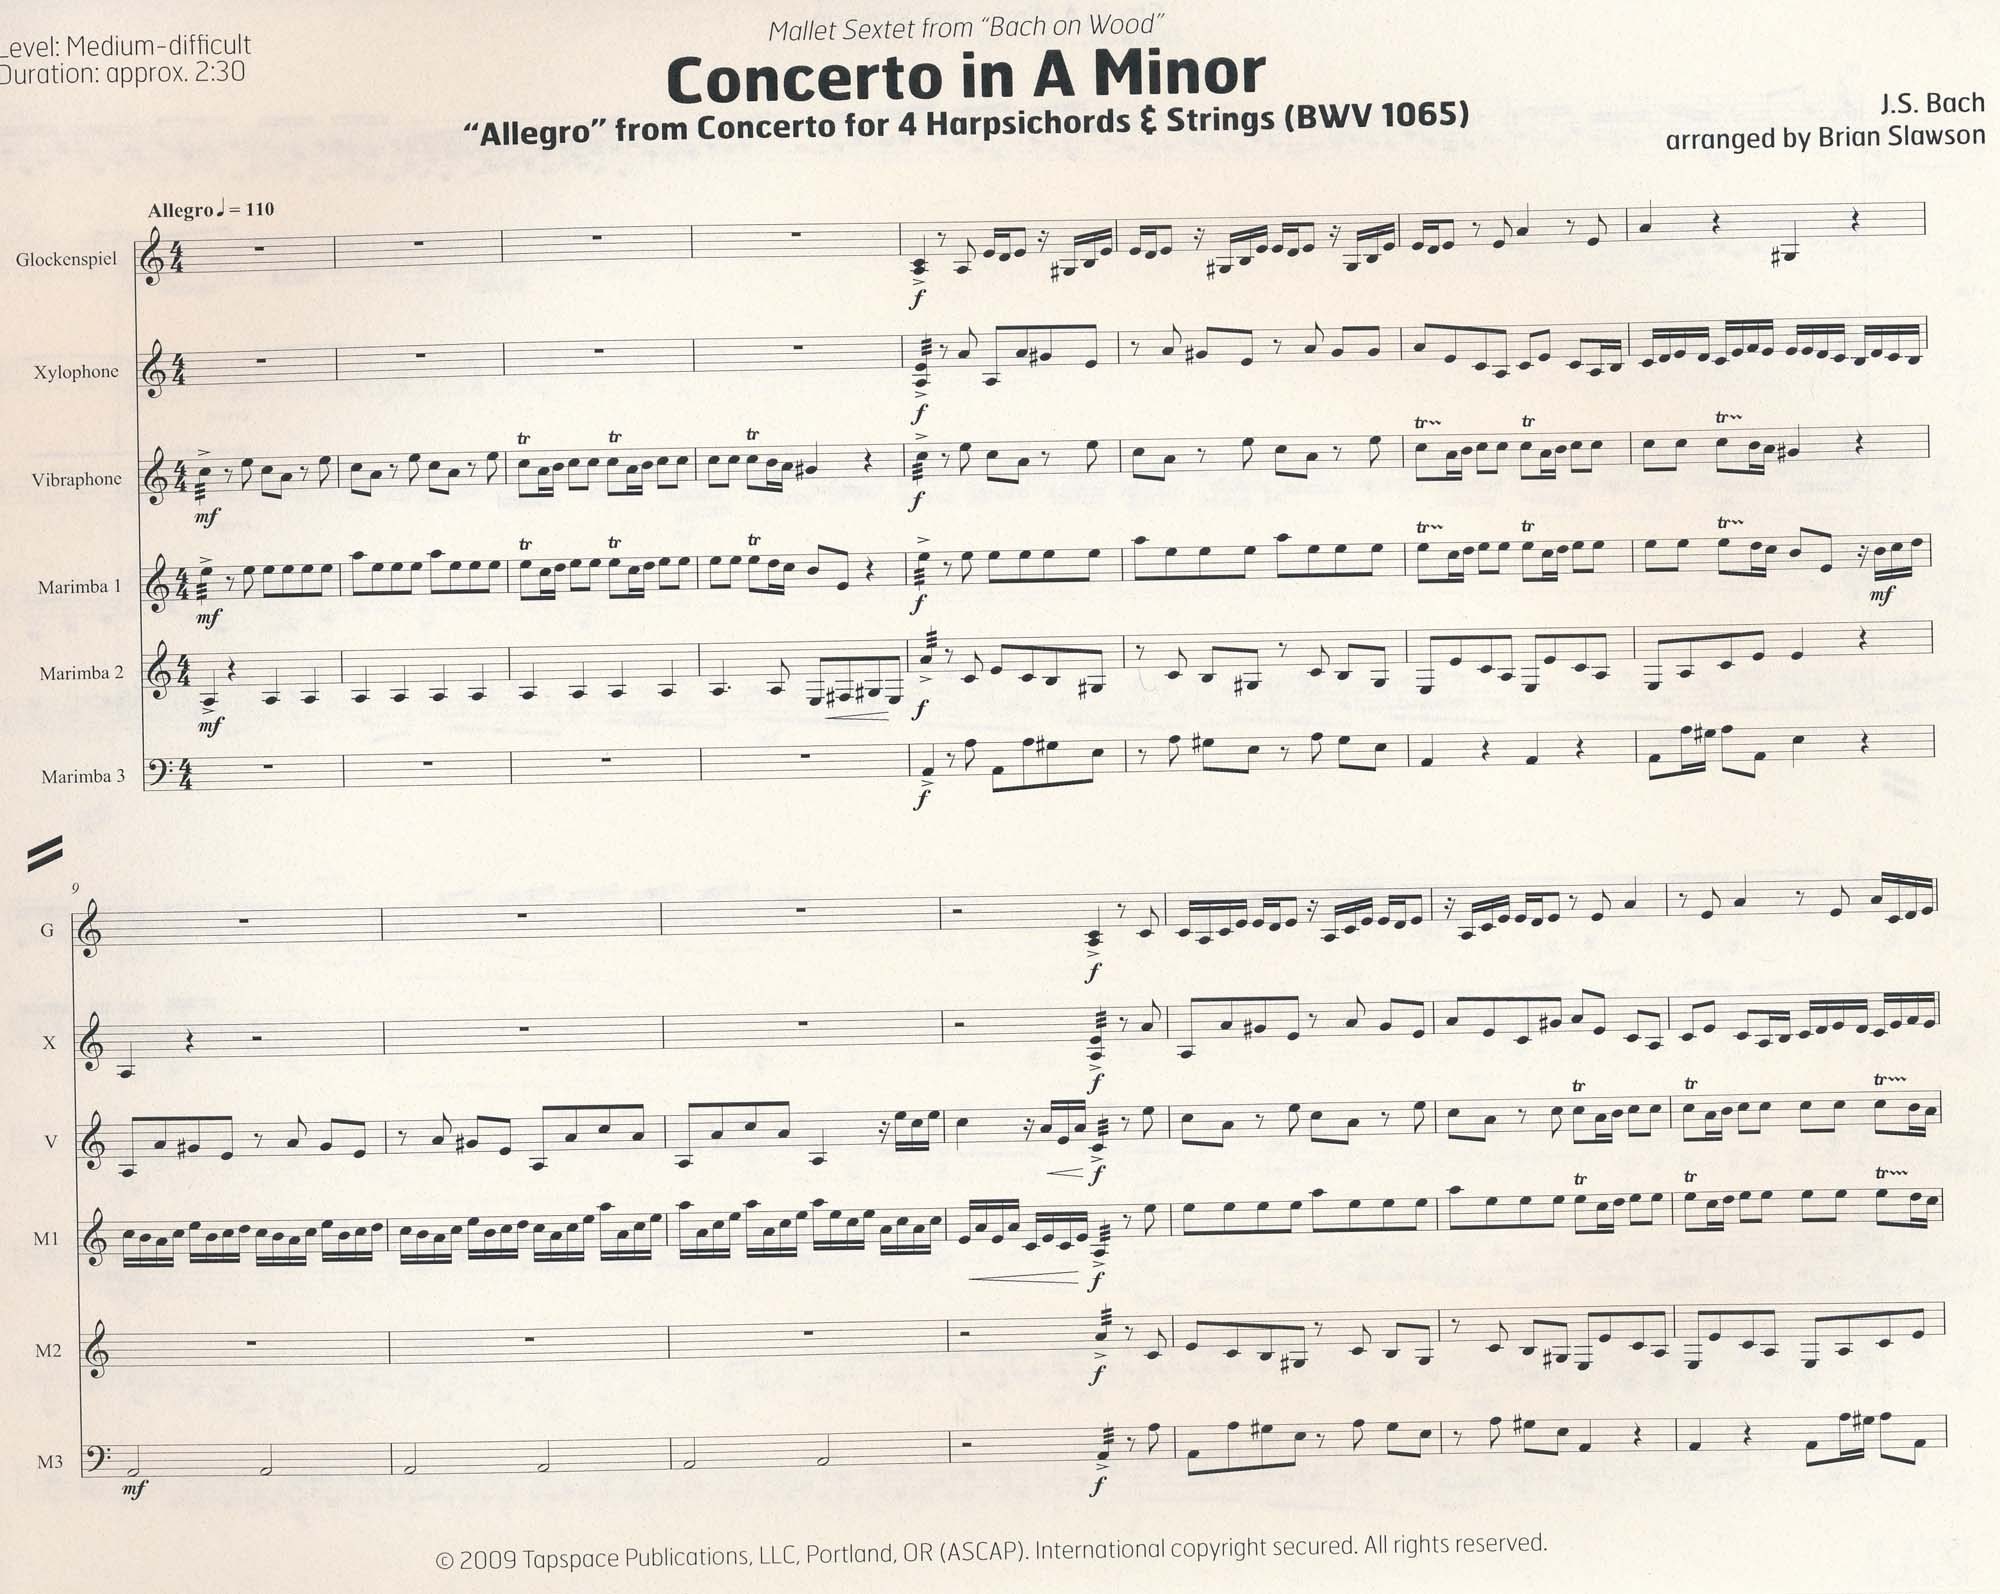 Concerto in A Minor by Bach arr. Brian Slawson